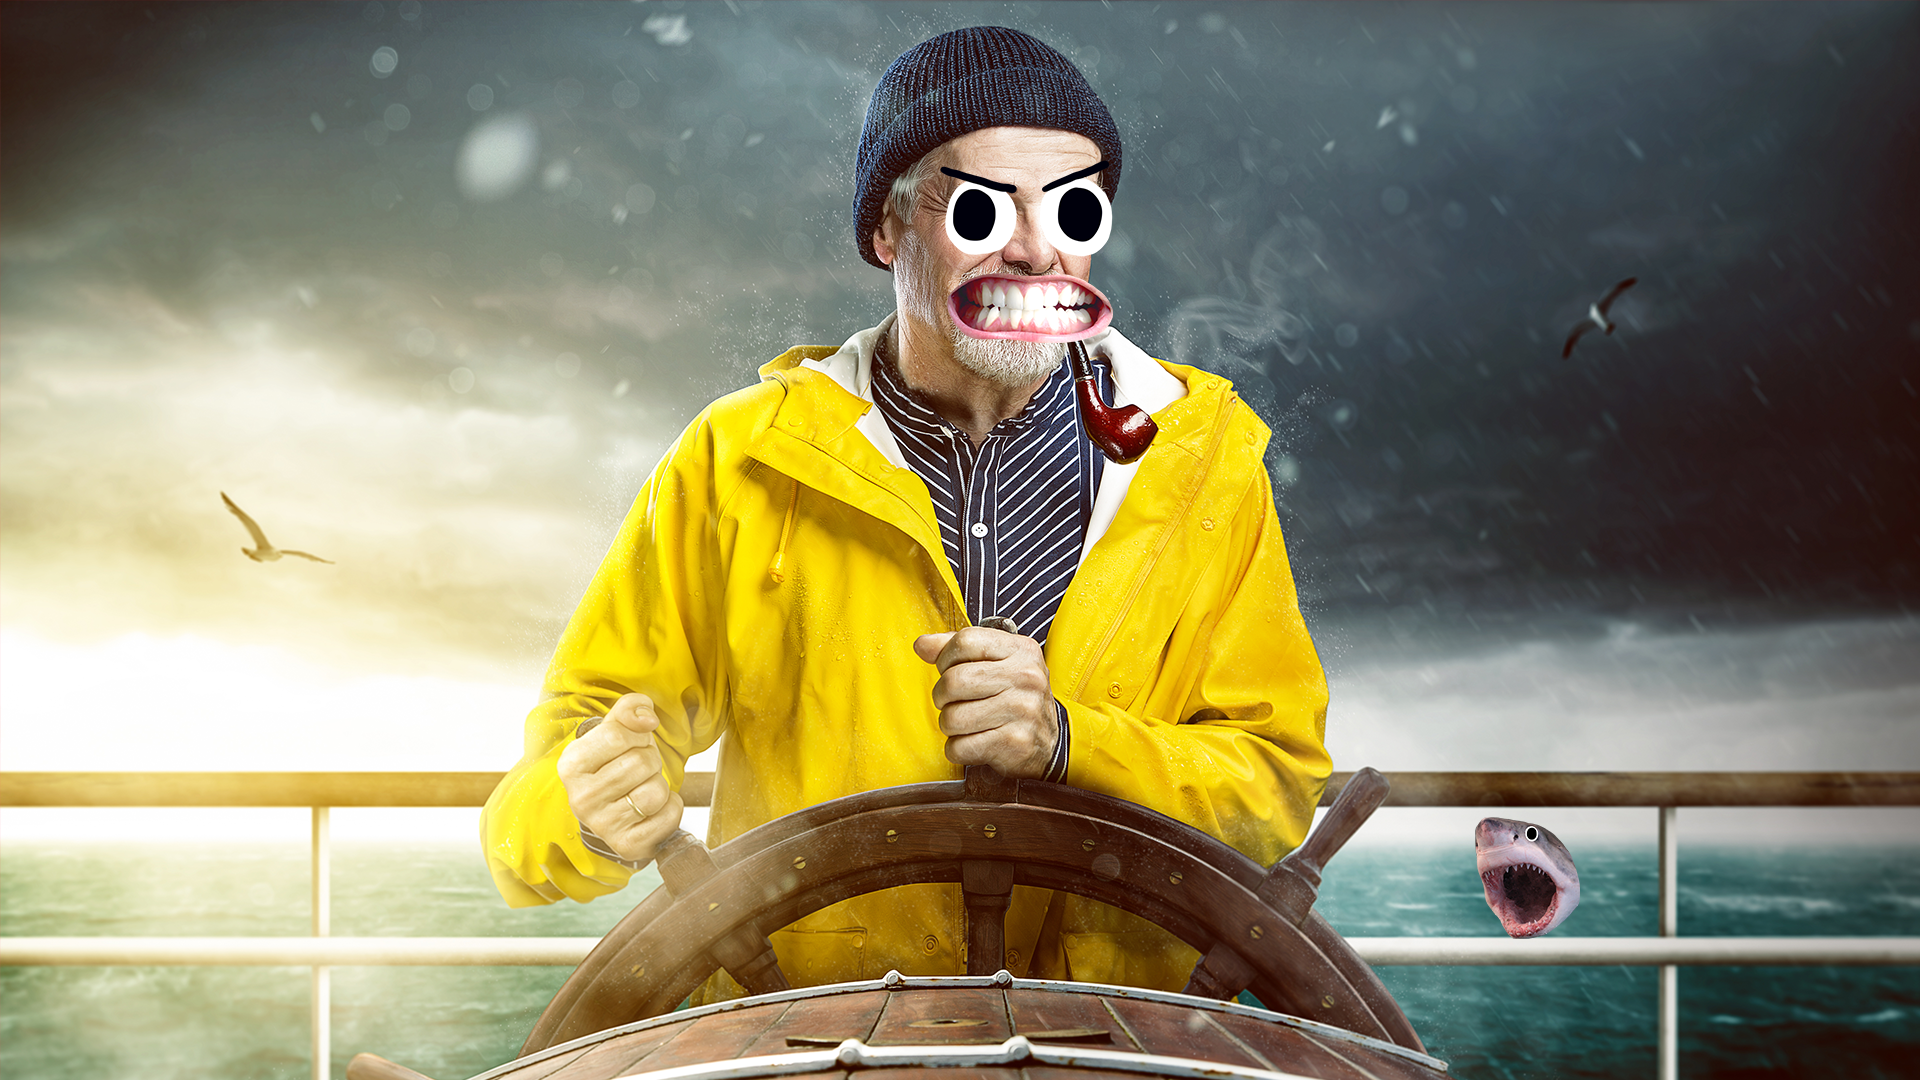 A sailor braving a storm